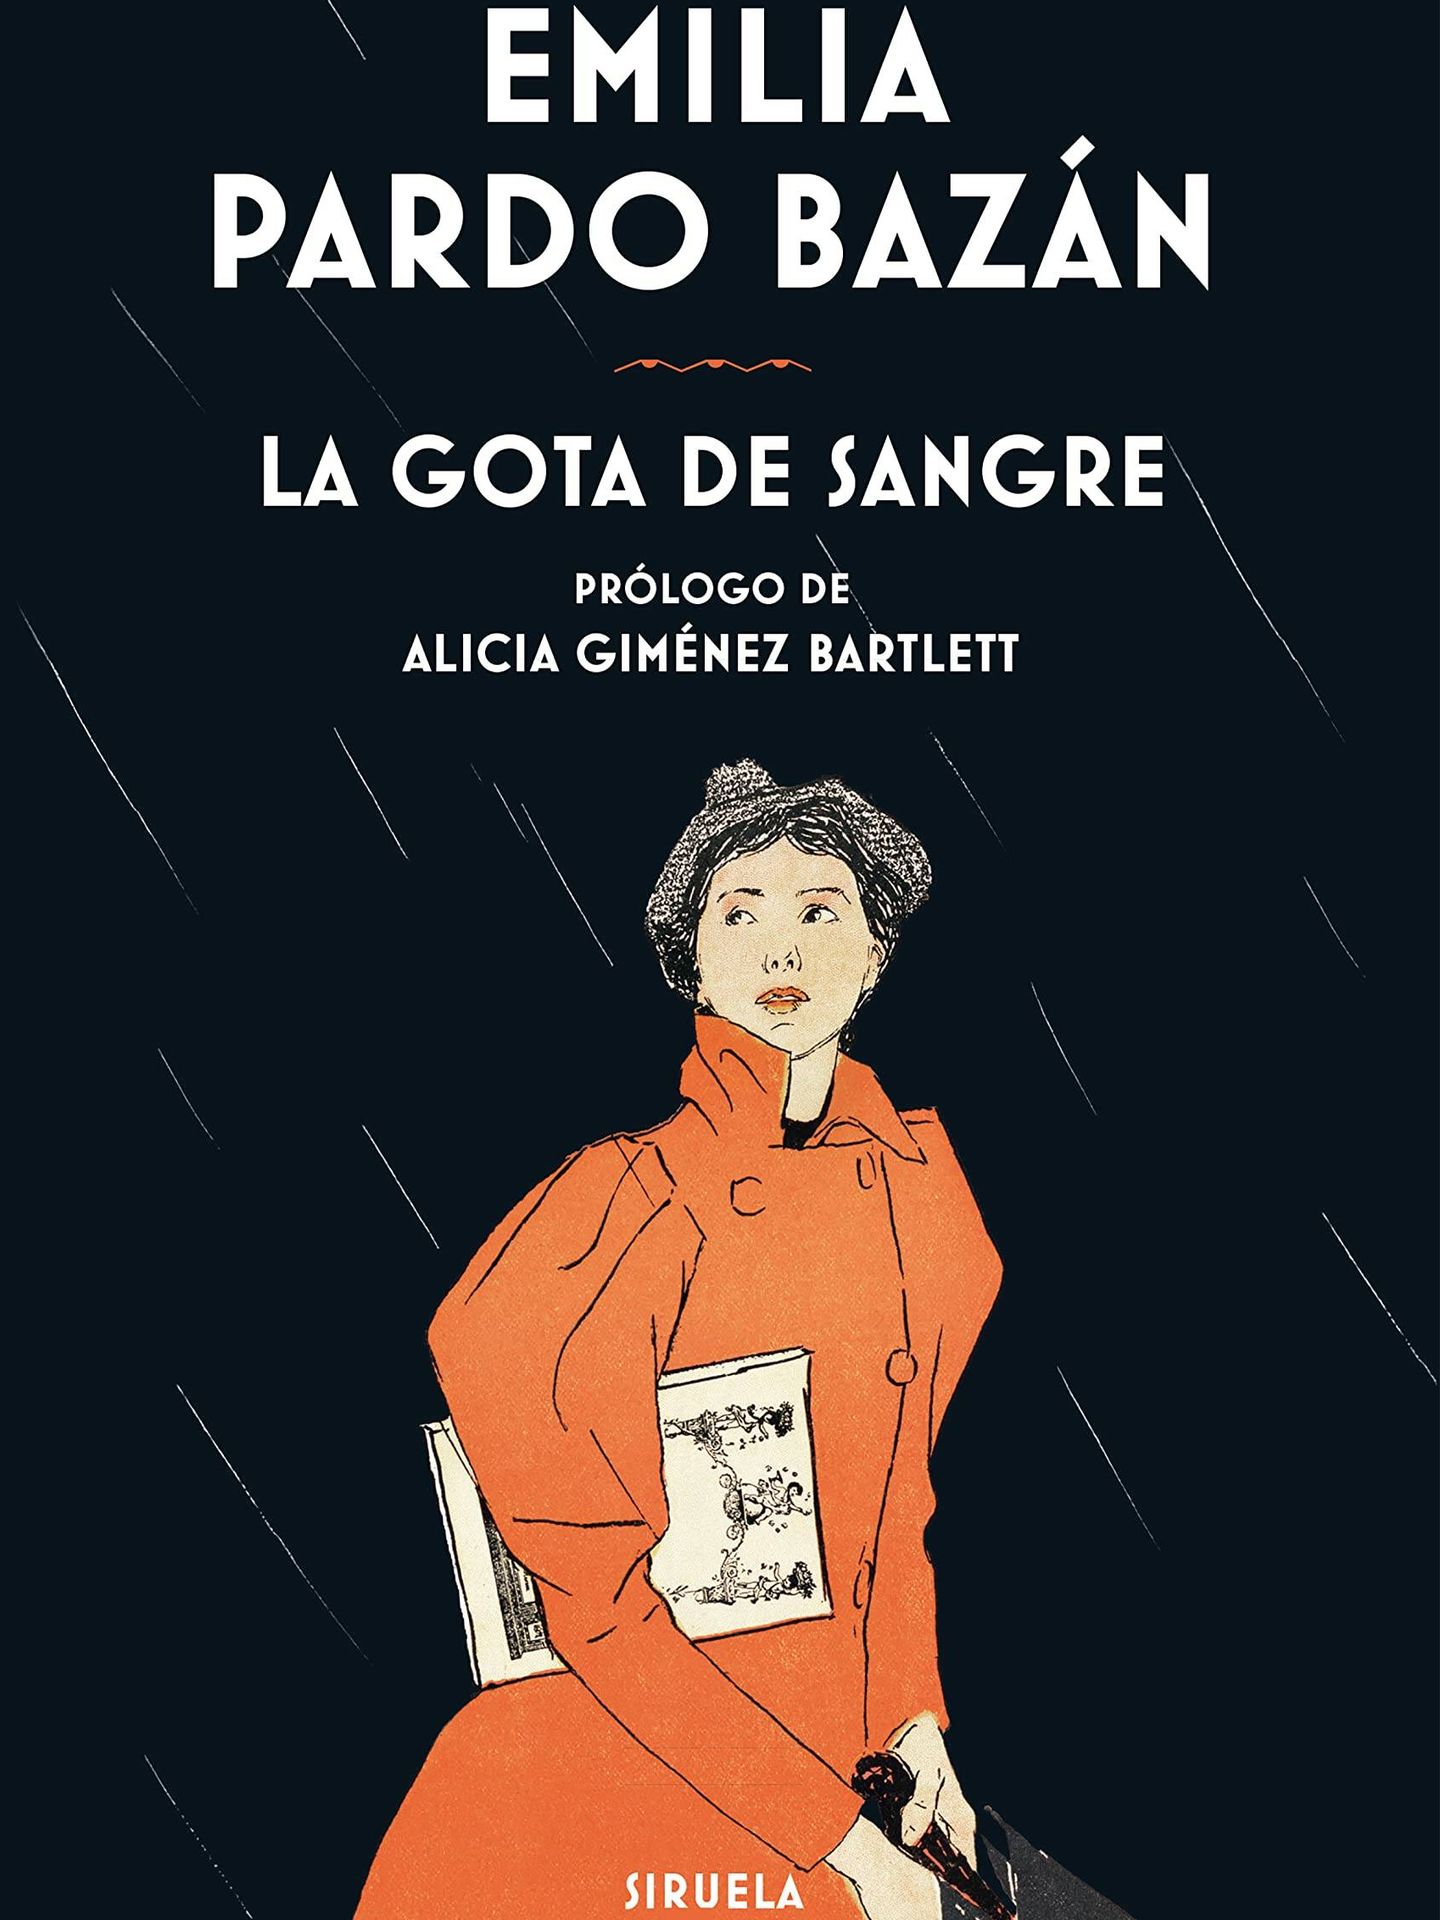 Portada de 'La gota de sangre', la novela de detectives escrita por Emilia Pardo Bazán.